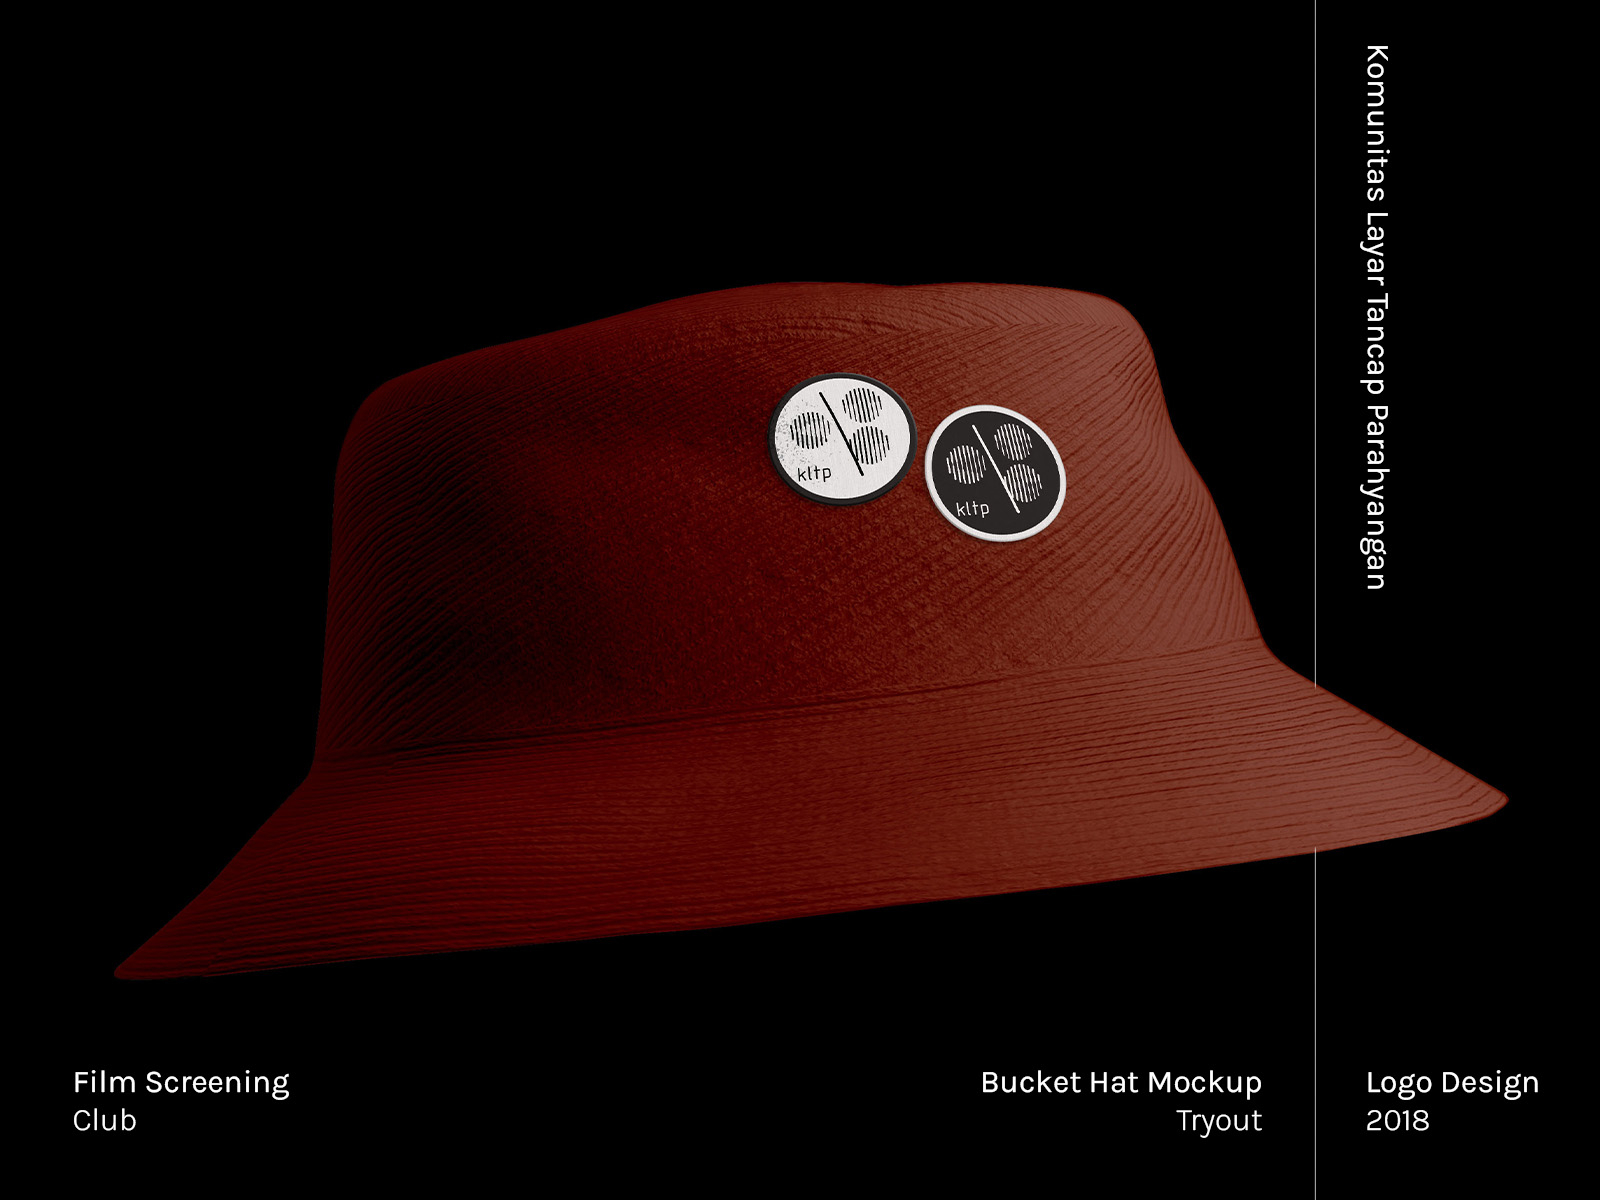 Bucket Hat Mockup by Jaggro Jingga on Dribbble